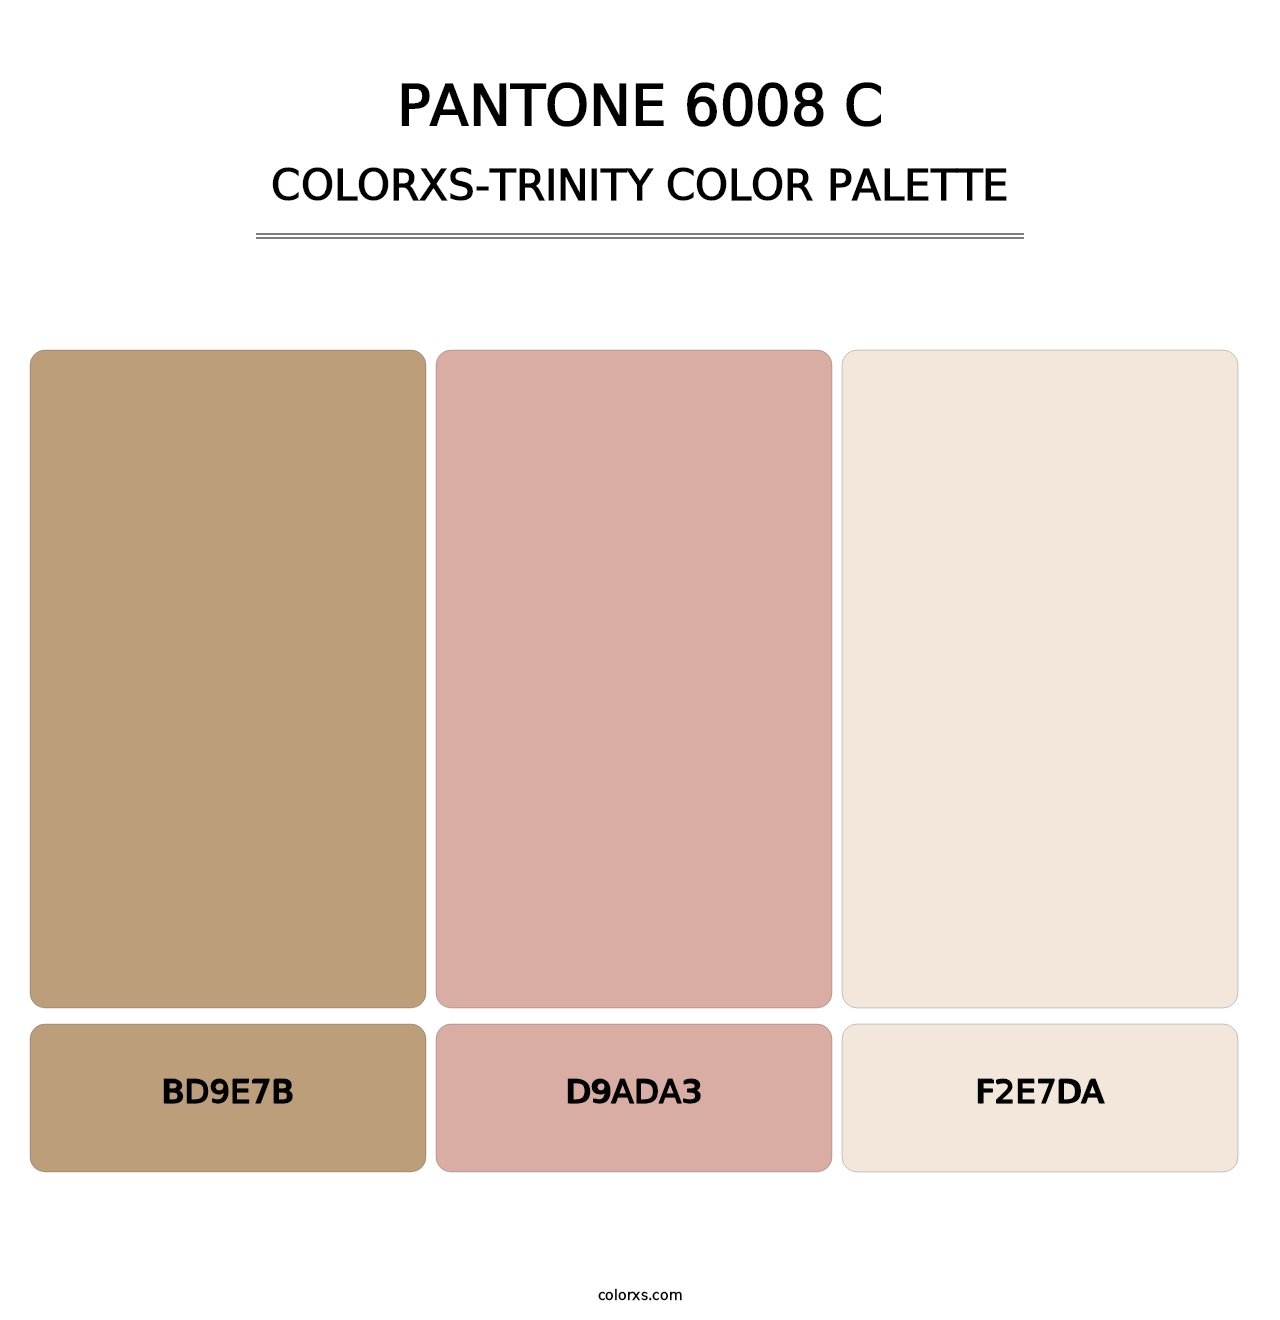 PANTONE 6008 C - Colorxs Trinity Palette